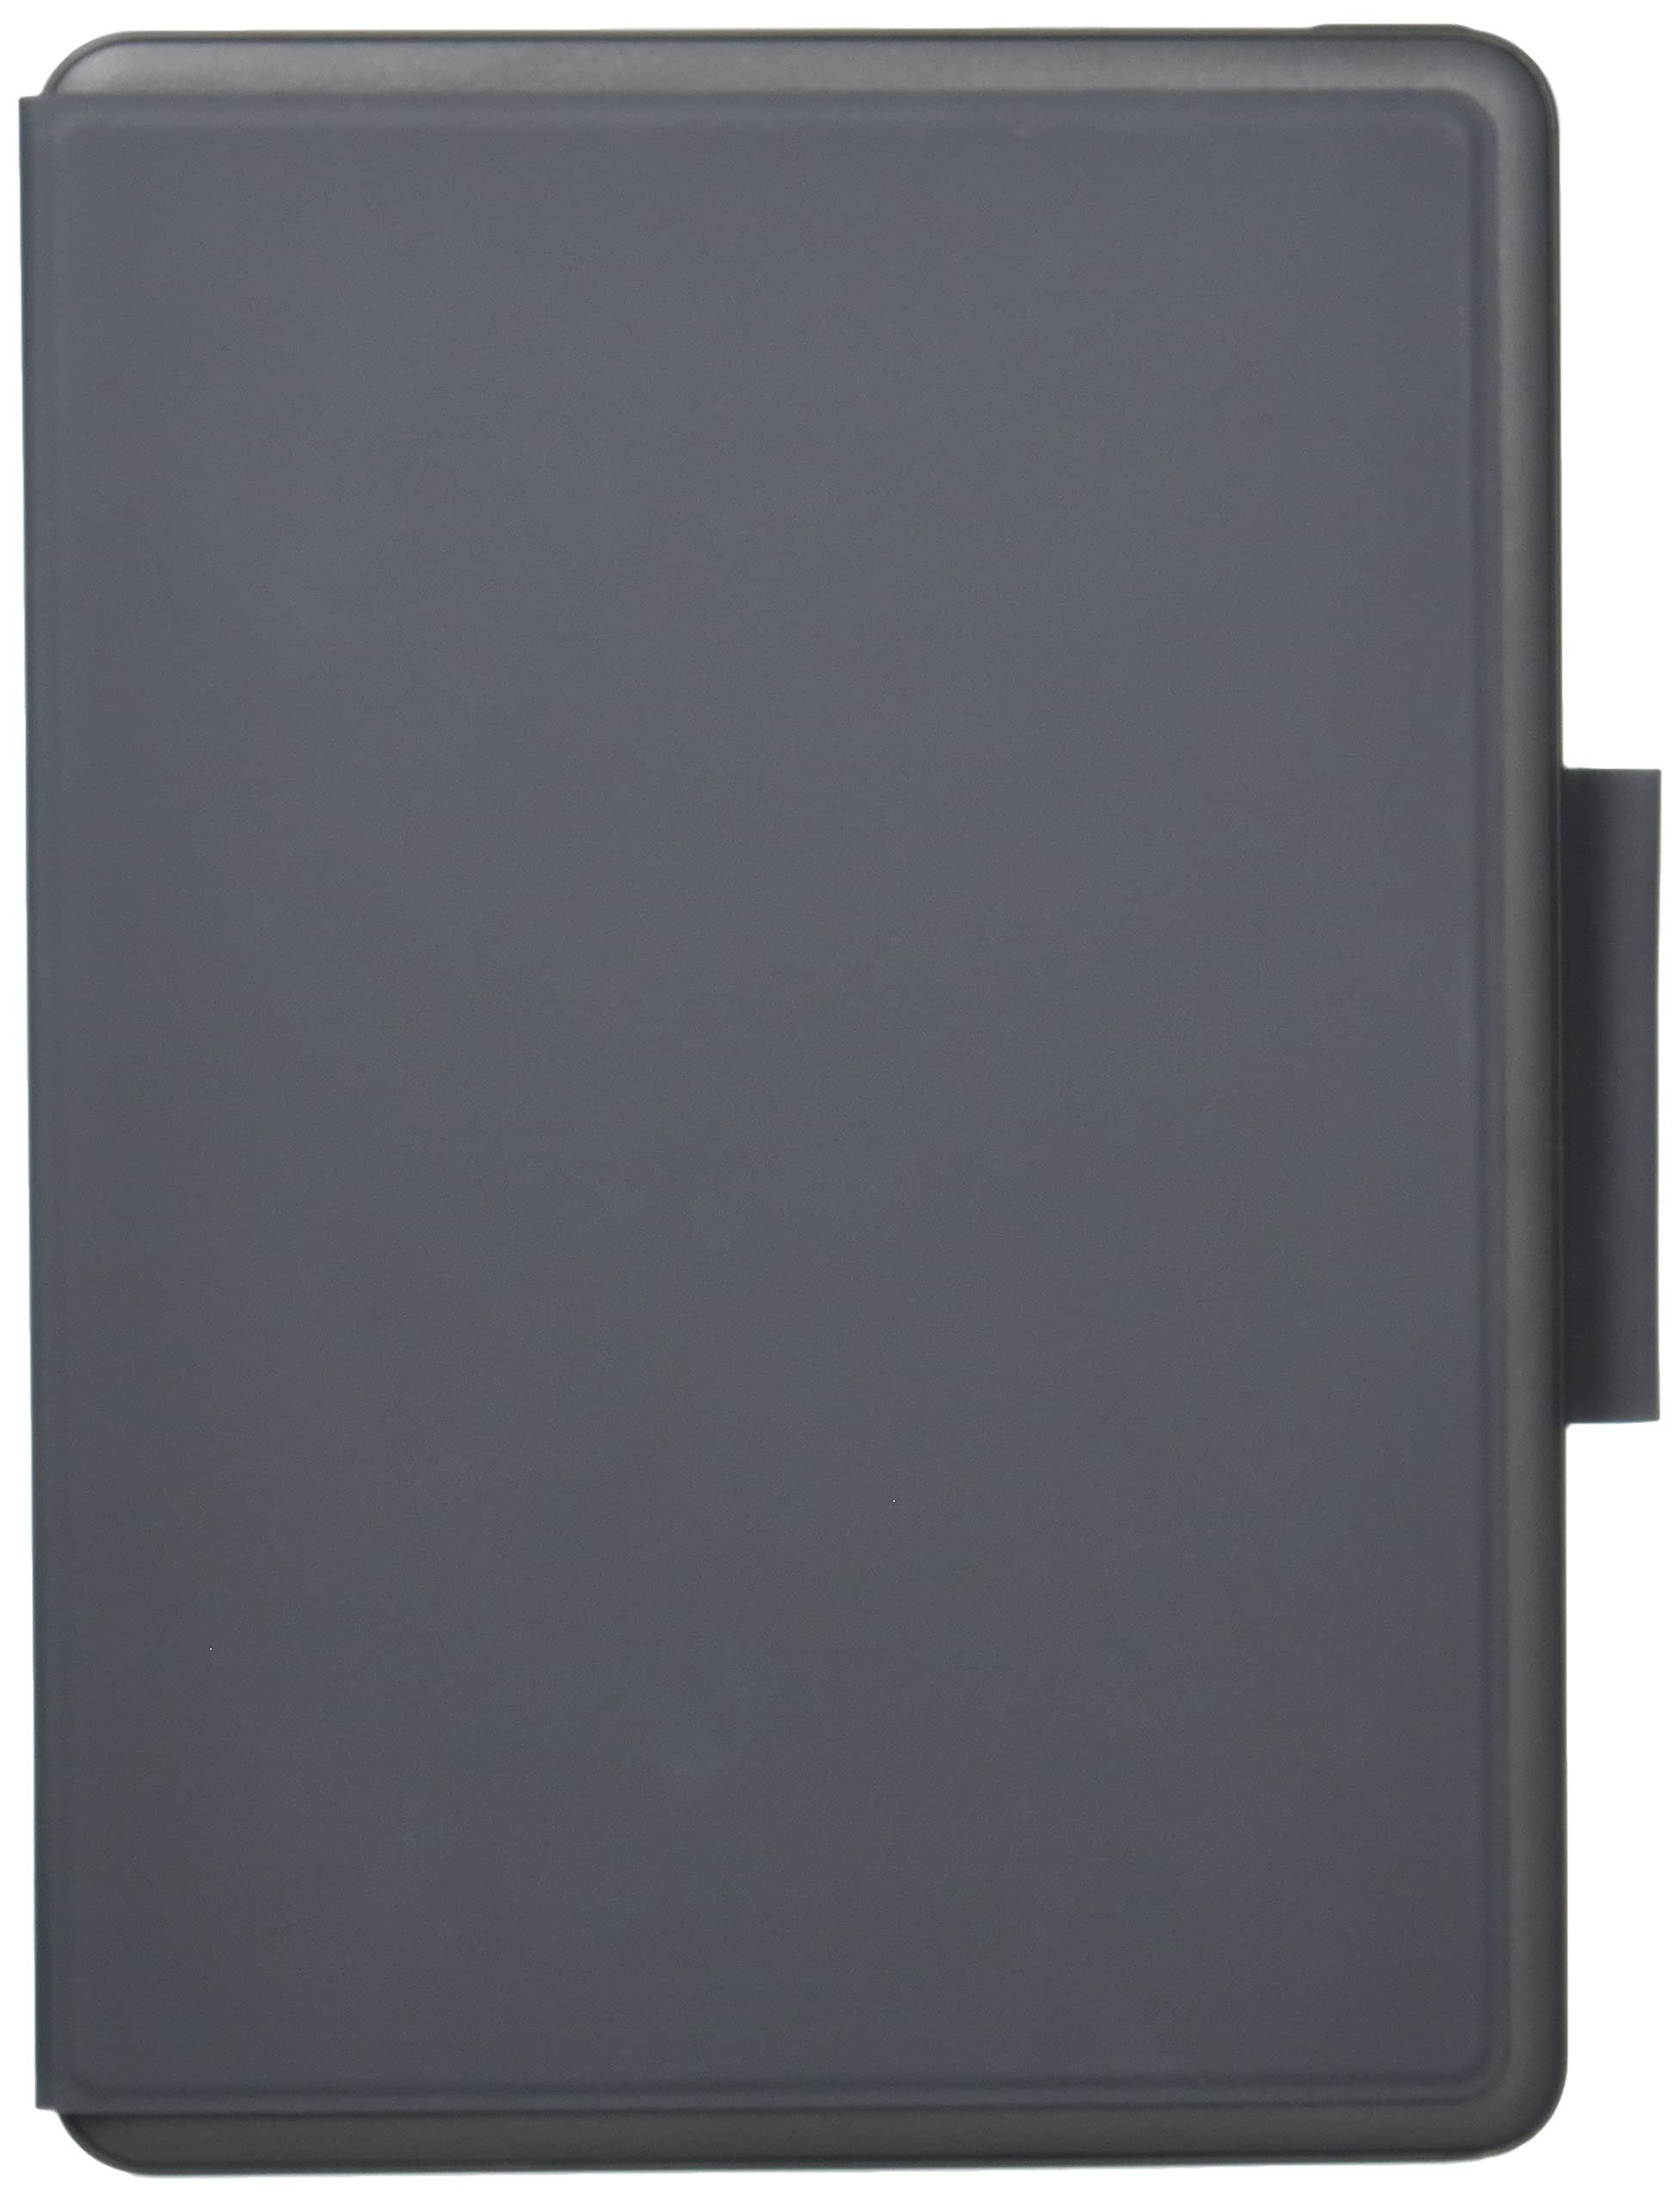 Logitech Slim Folio for The New Seventh-Generation iPad  - Like New